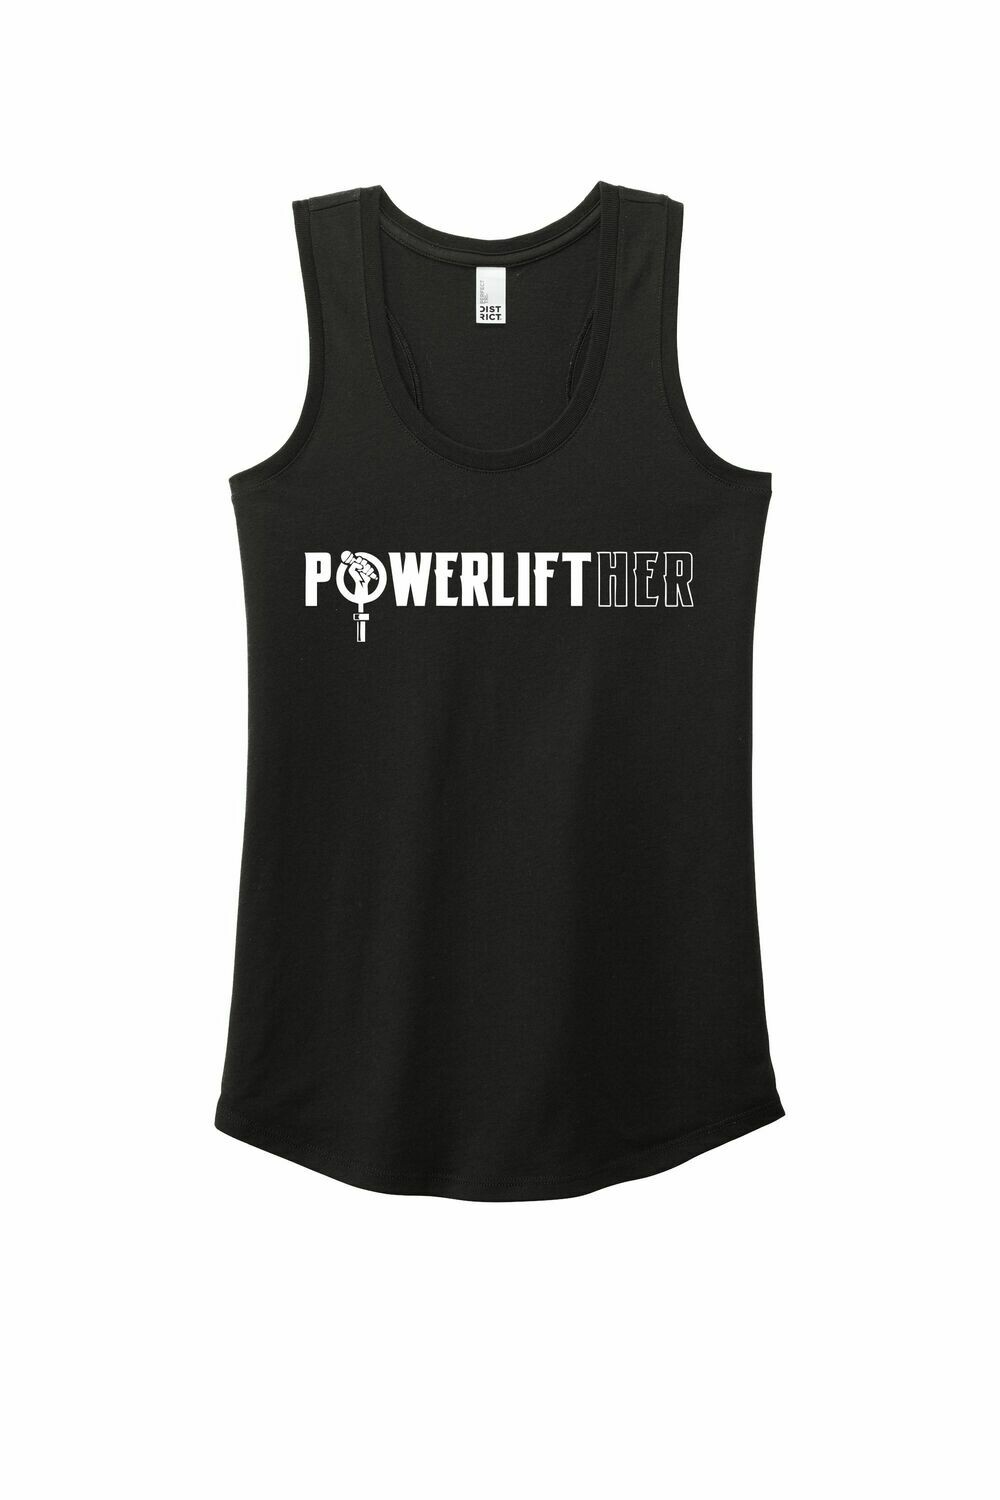 NEW! Powerlifther Ladies Soft Tank